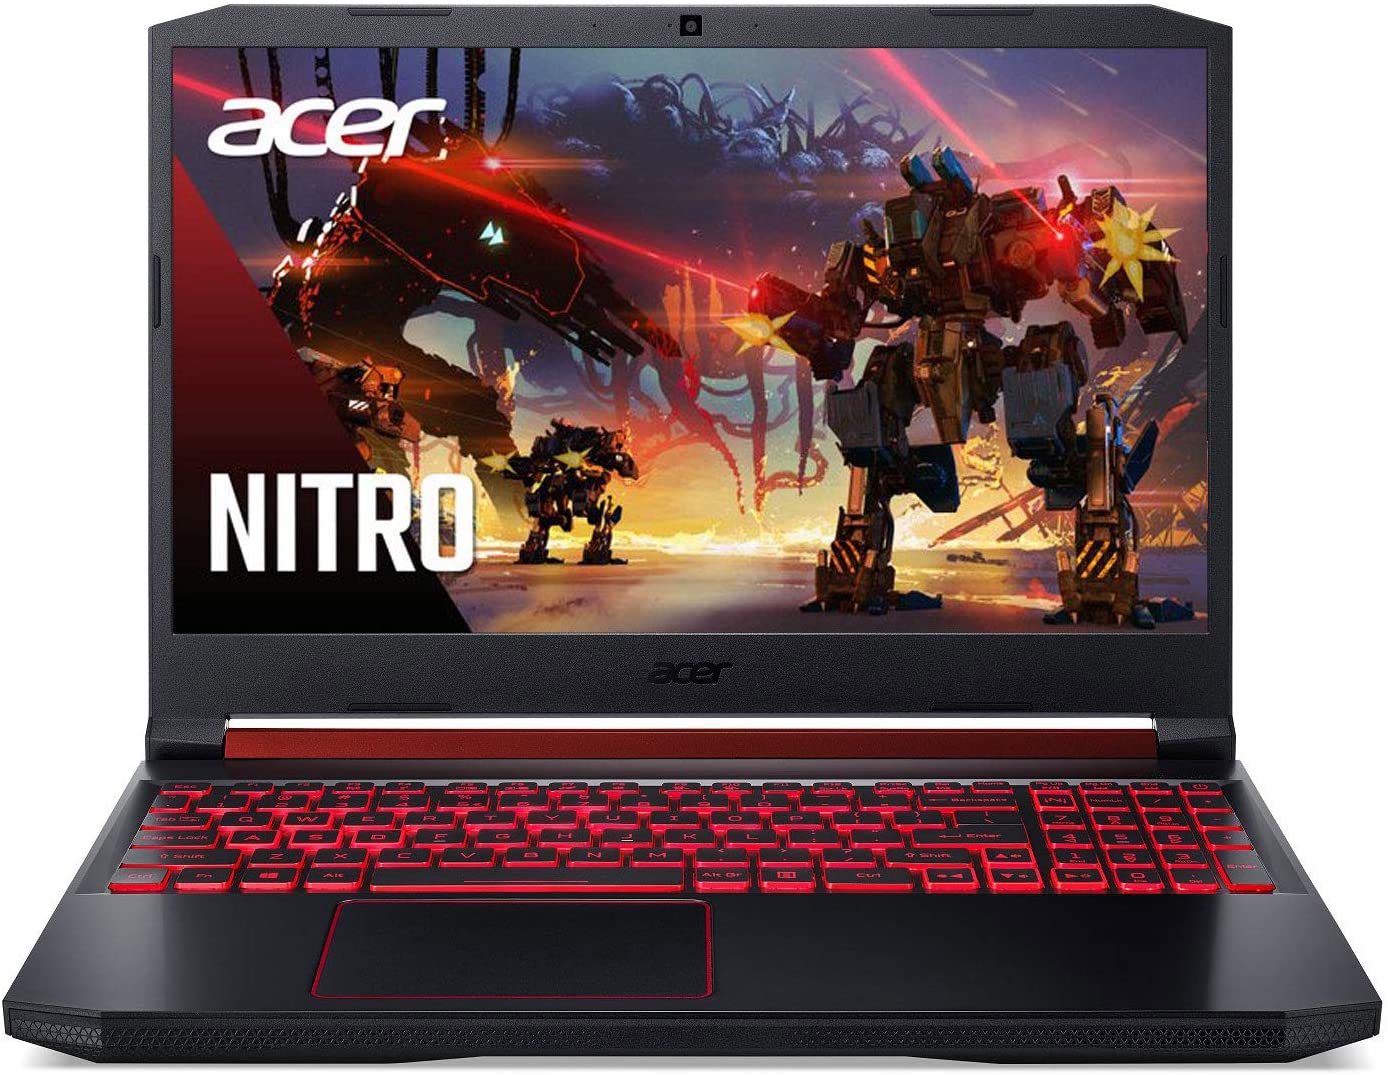 Acer Nitro 5 9th Gen Intel Core i7 Laptop